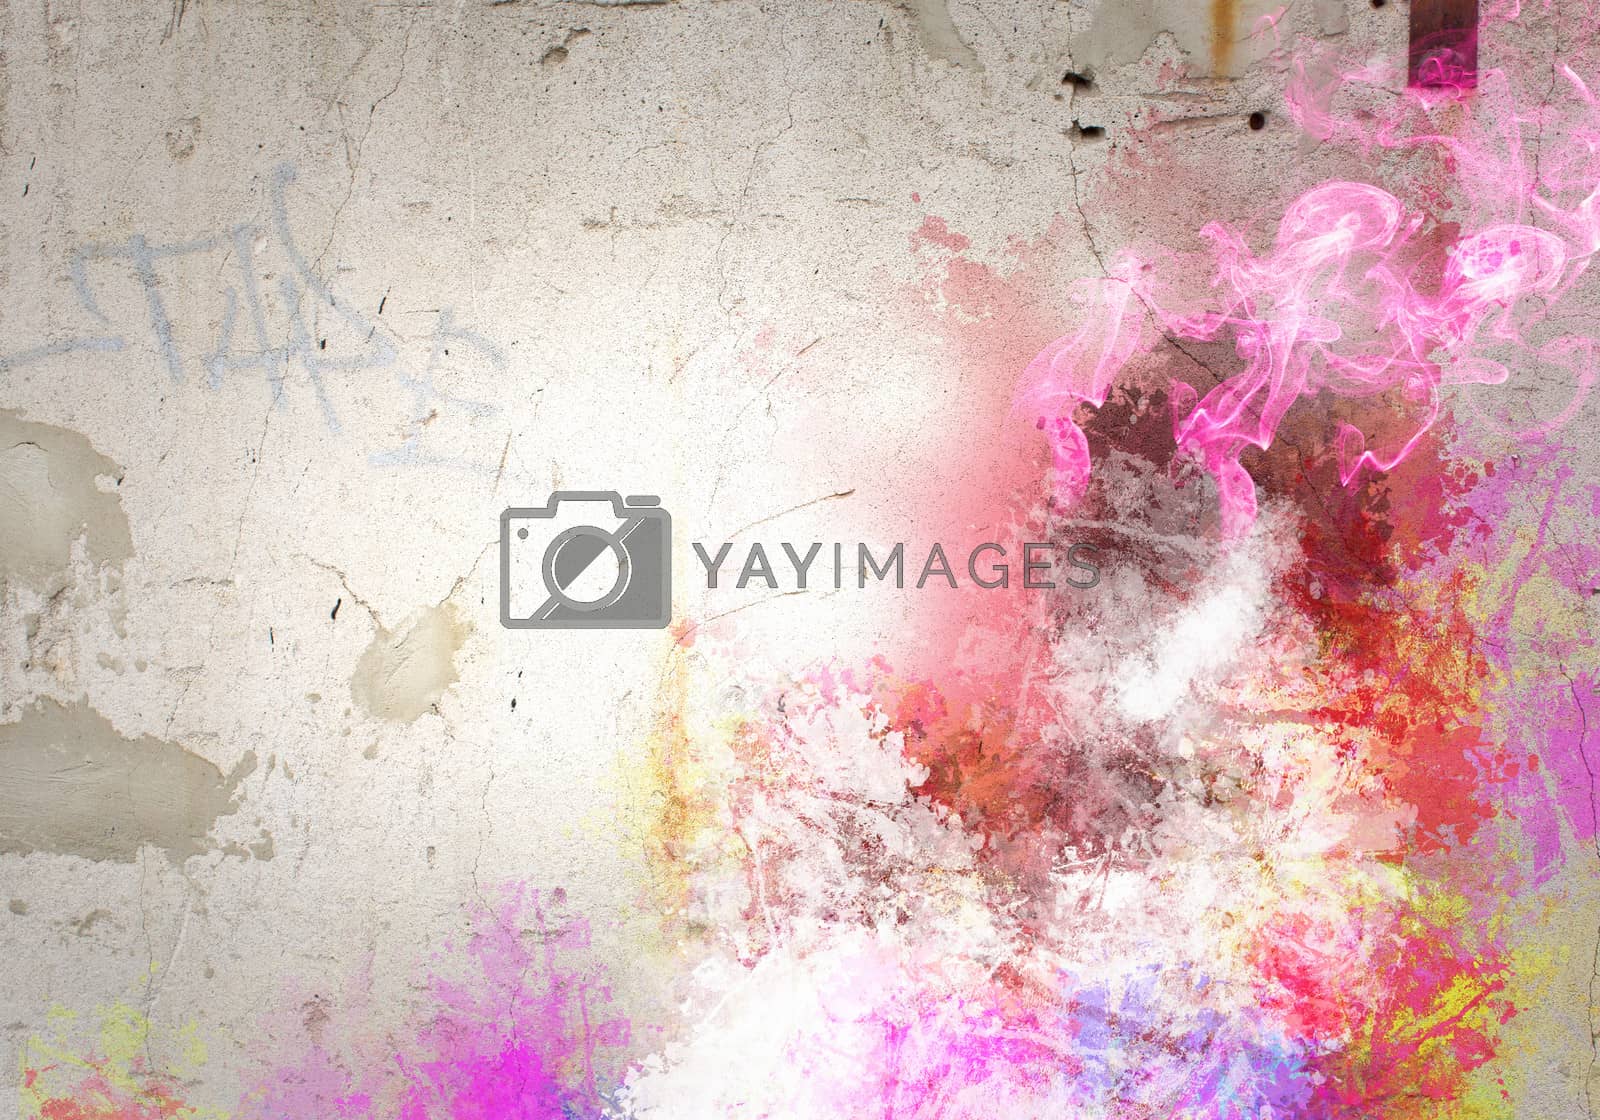 Royalty free image of Grunge background image by sergey_nivens